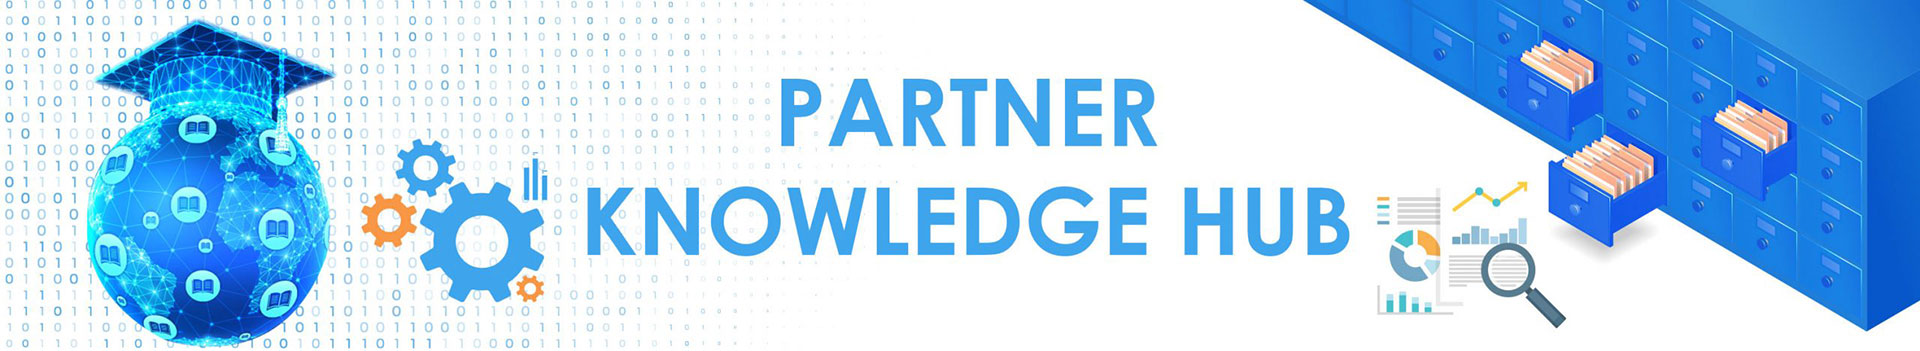 Partner Knowledge Hub